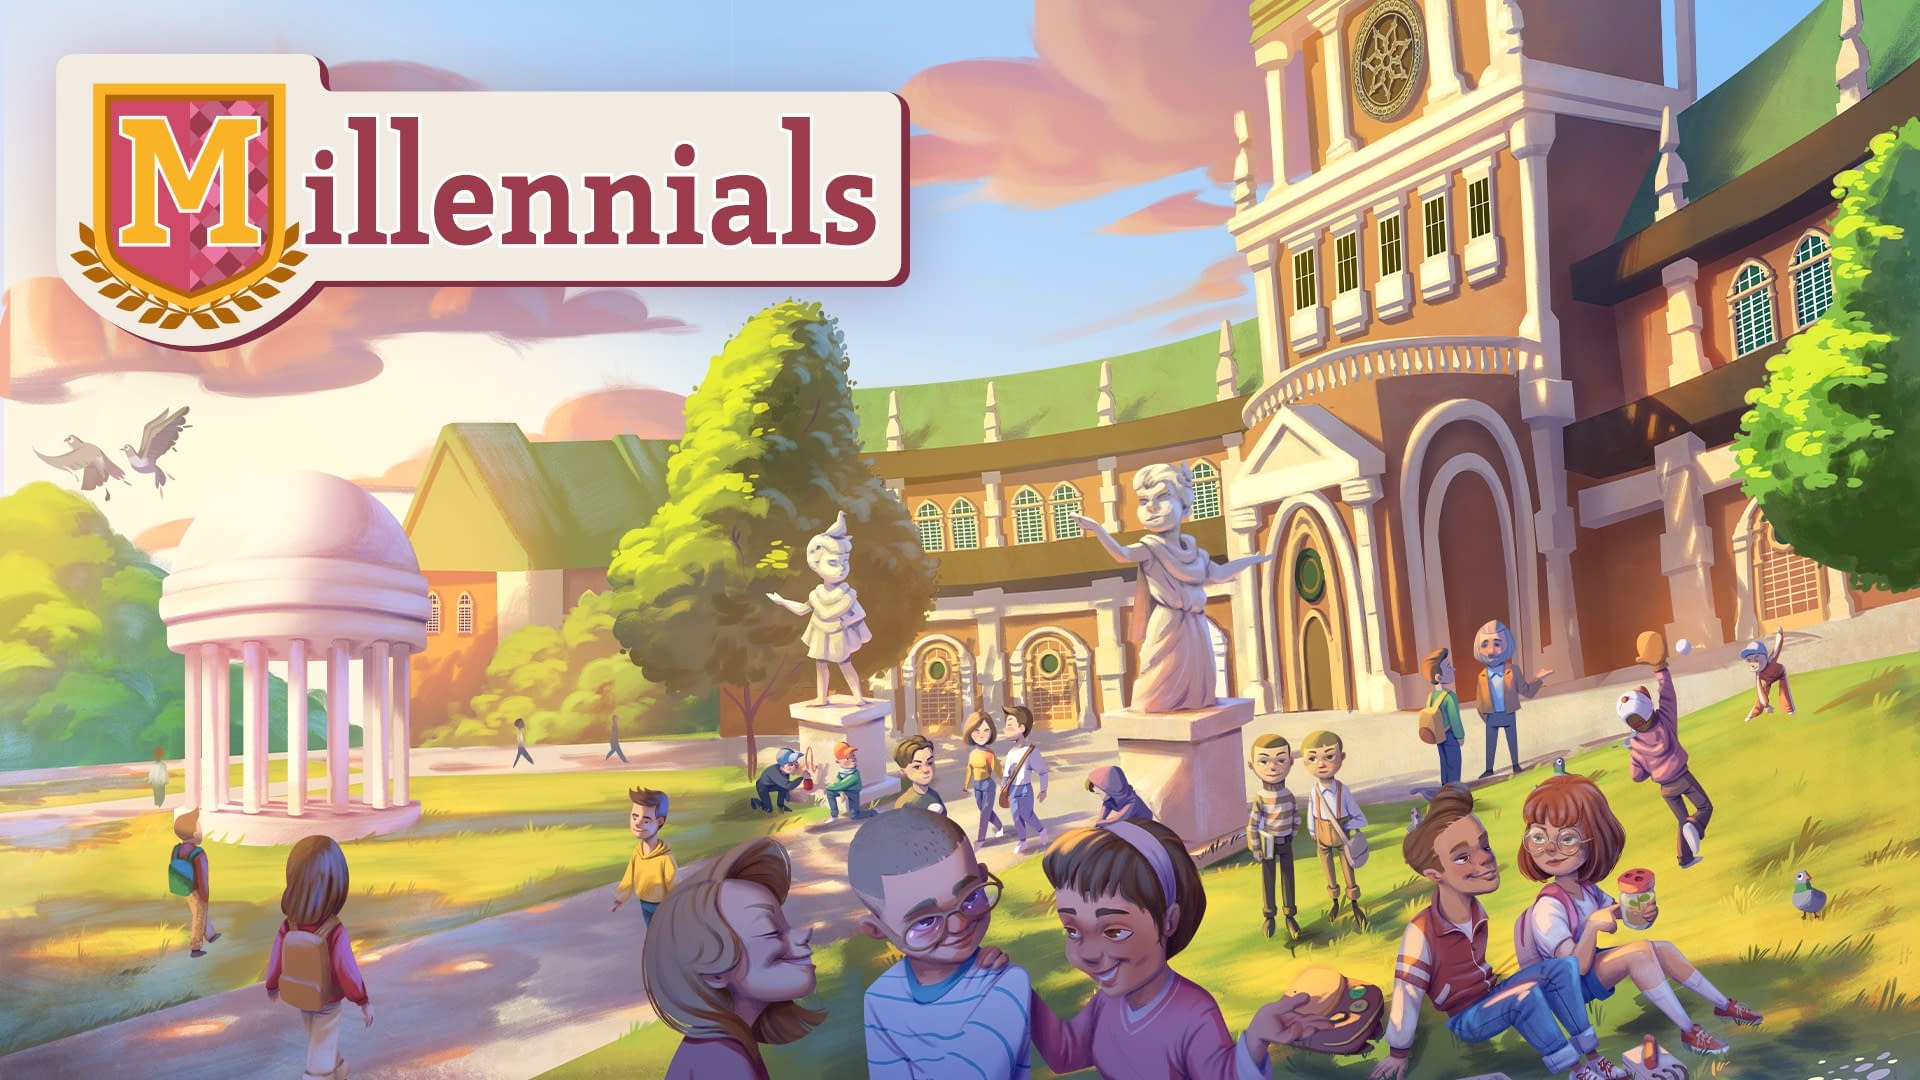 New College Life Simulator Game Millennials Announced